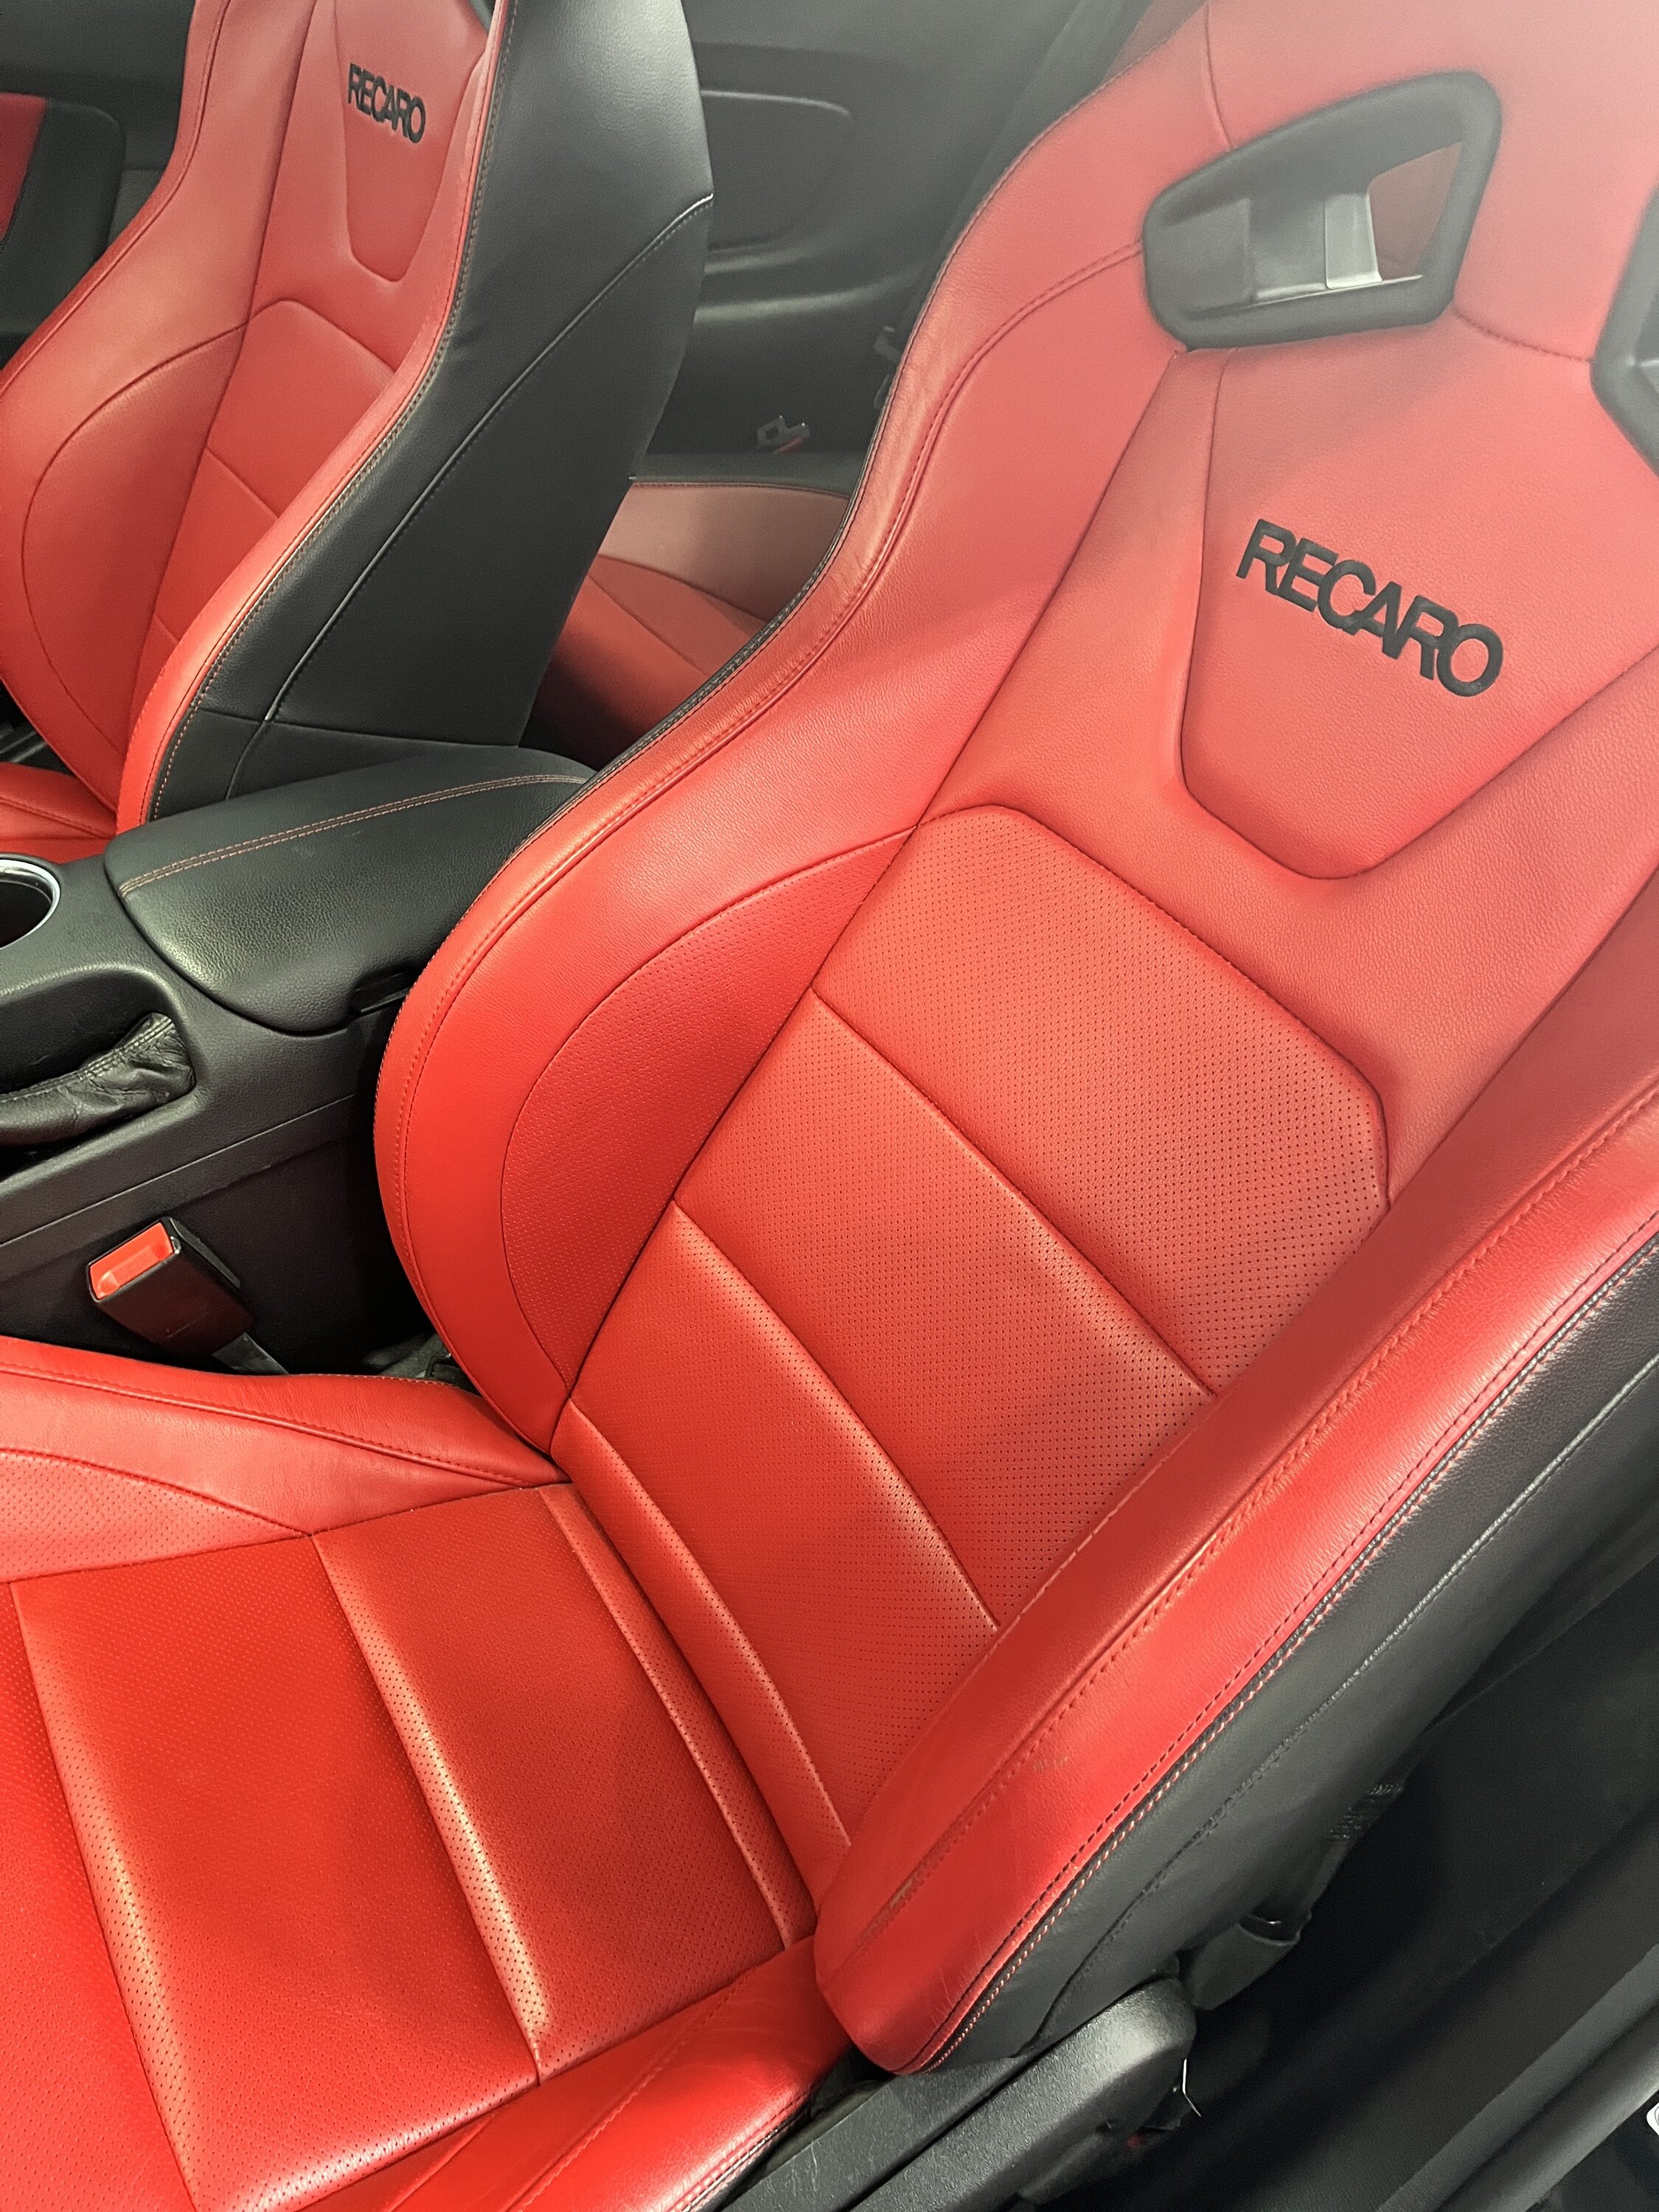 S650 Mustang Are the Recaros worth it? red Recaro2.JPG